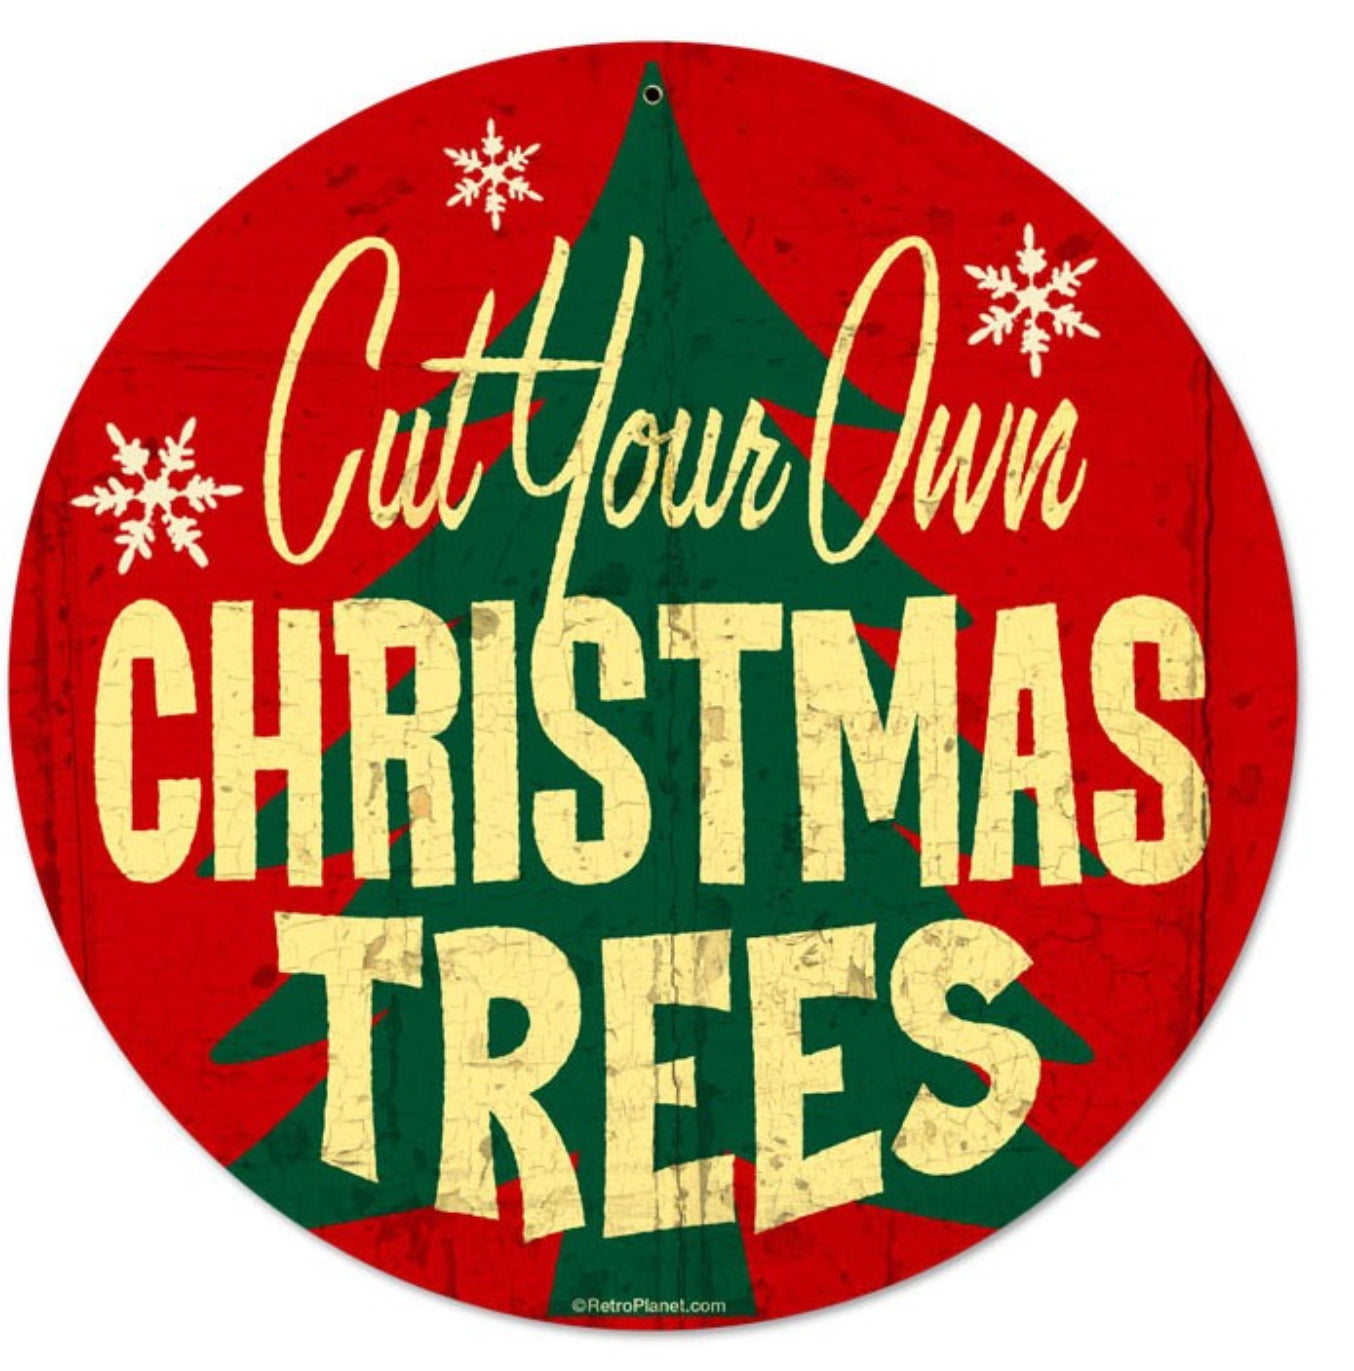 Blechschild "Cut Your Own Christmas Trees"